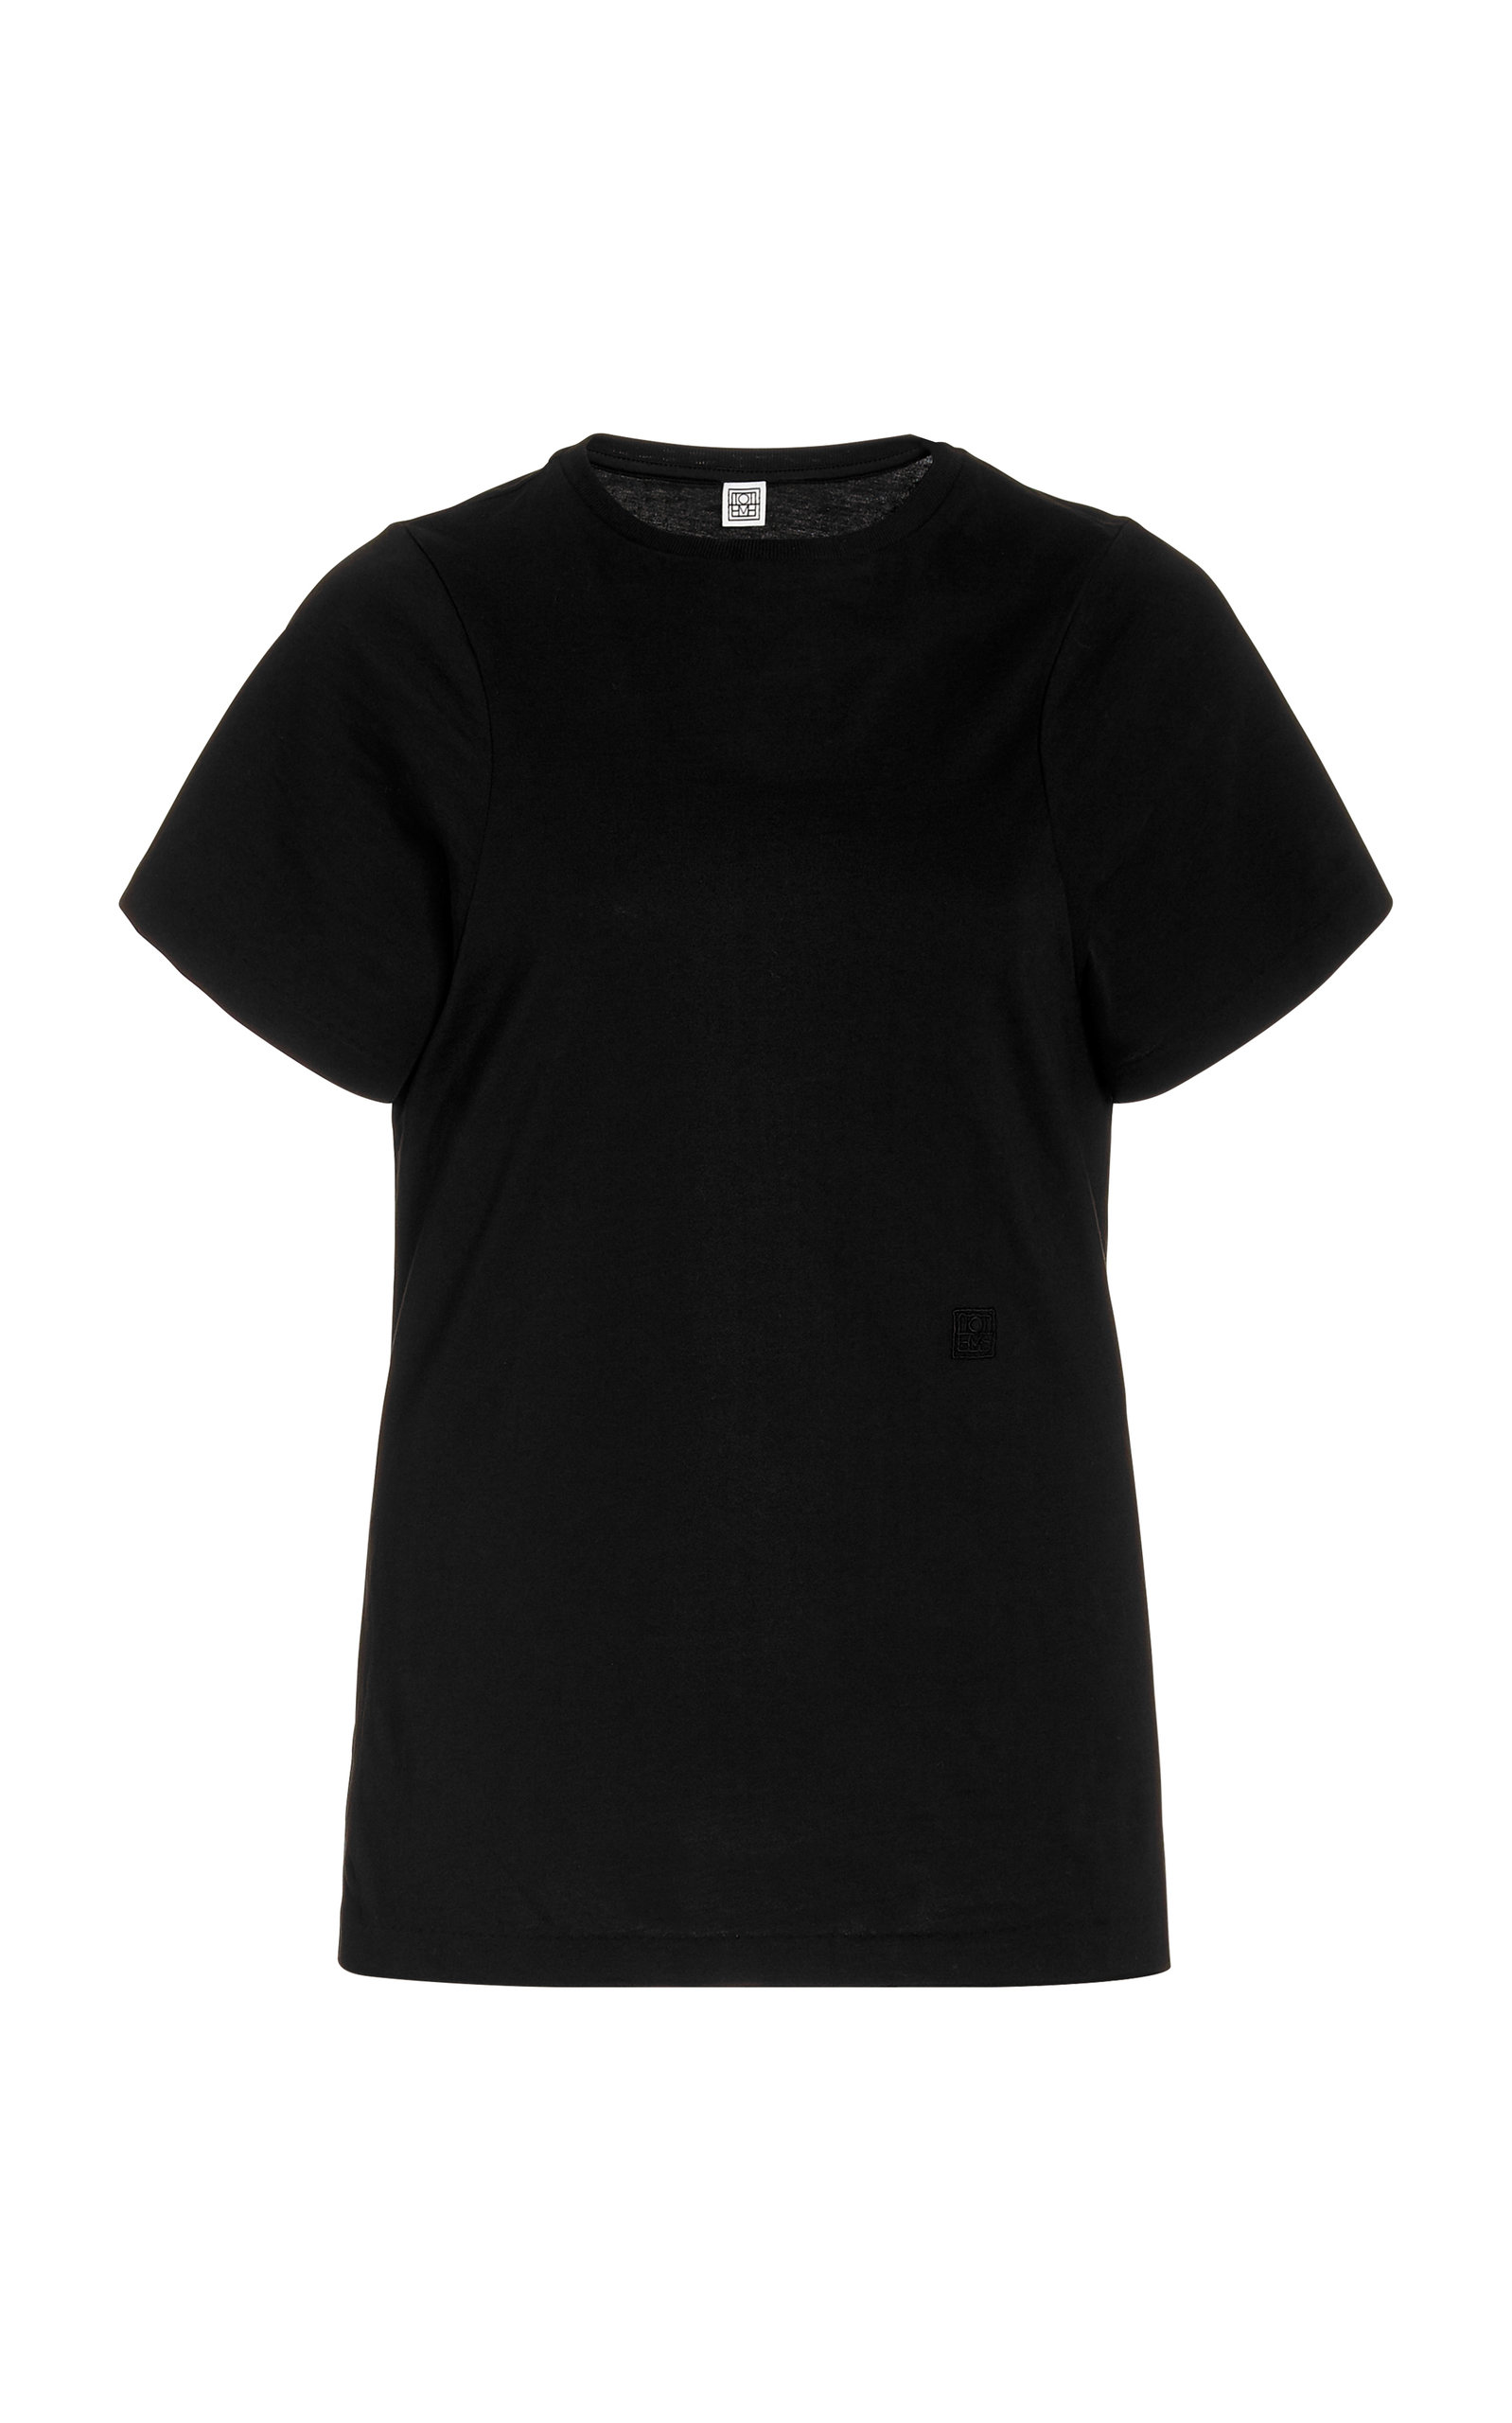 Totême - Women's Espera Cotton T-Shirt - Black/white - Moda Operandi